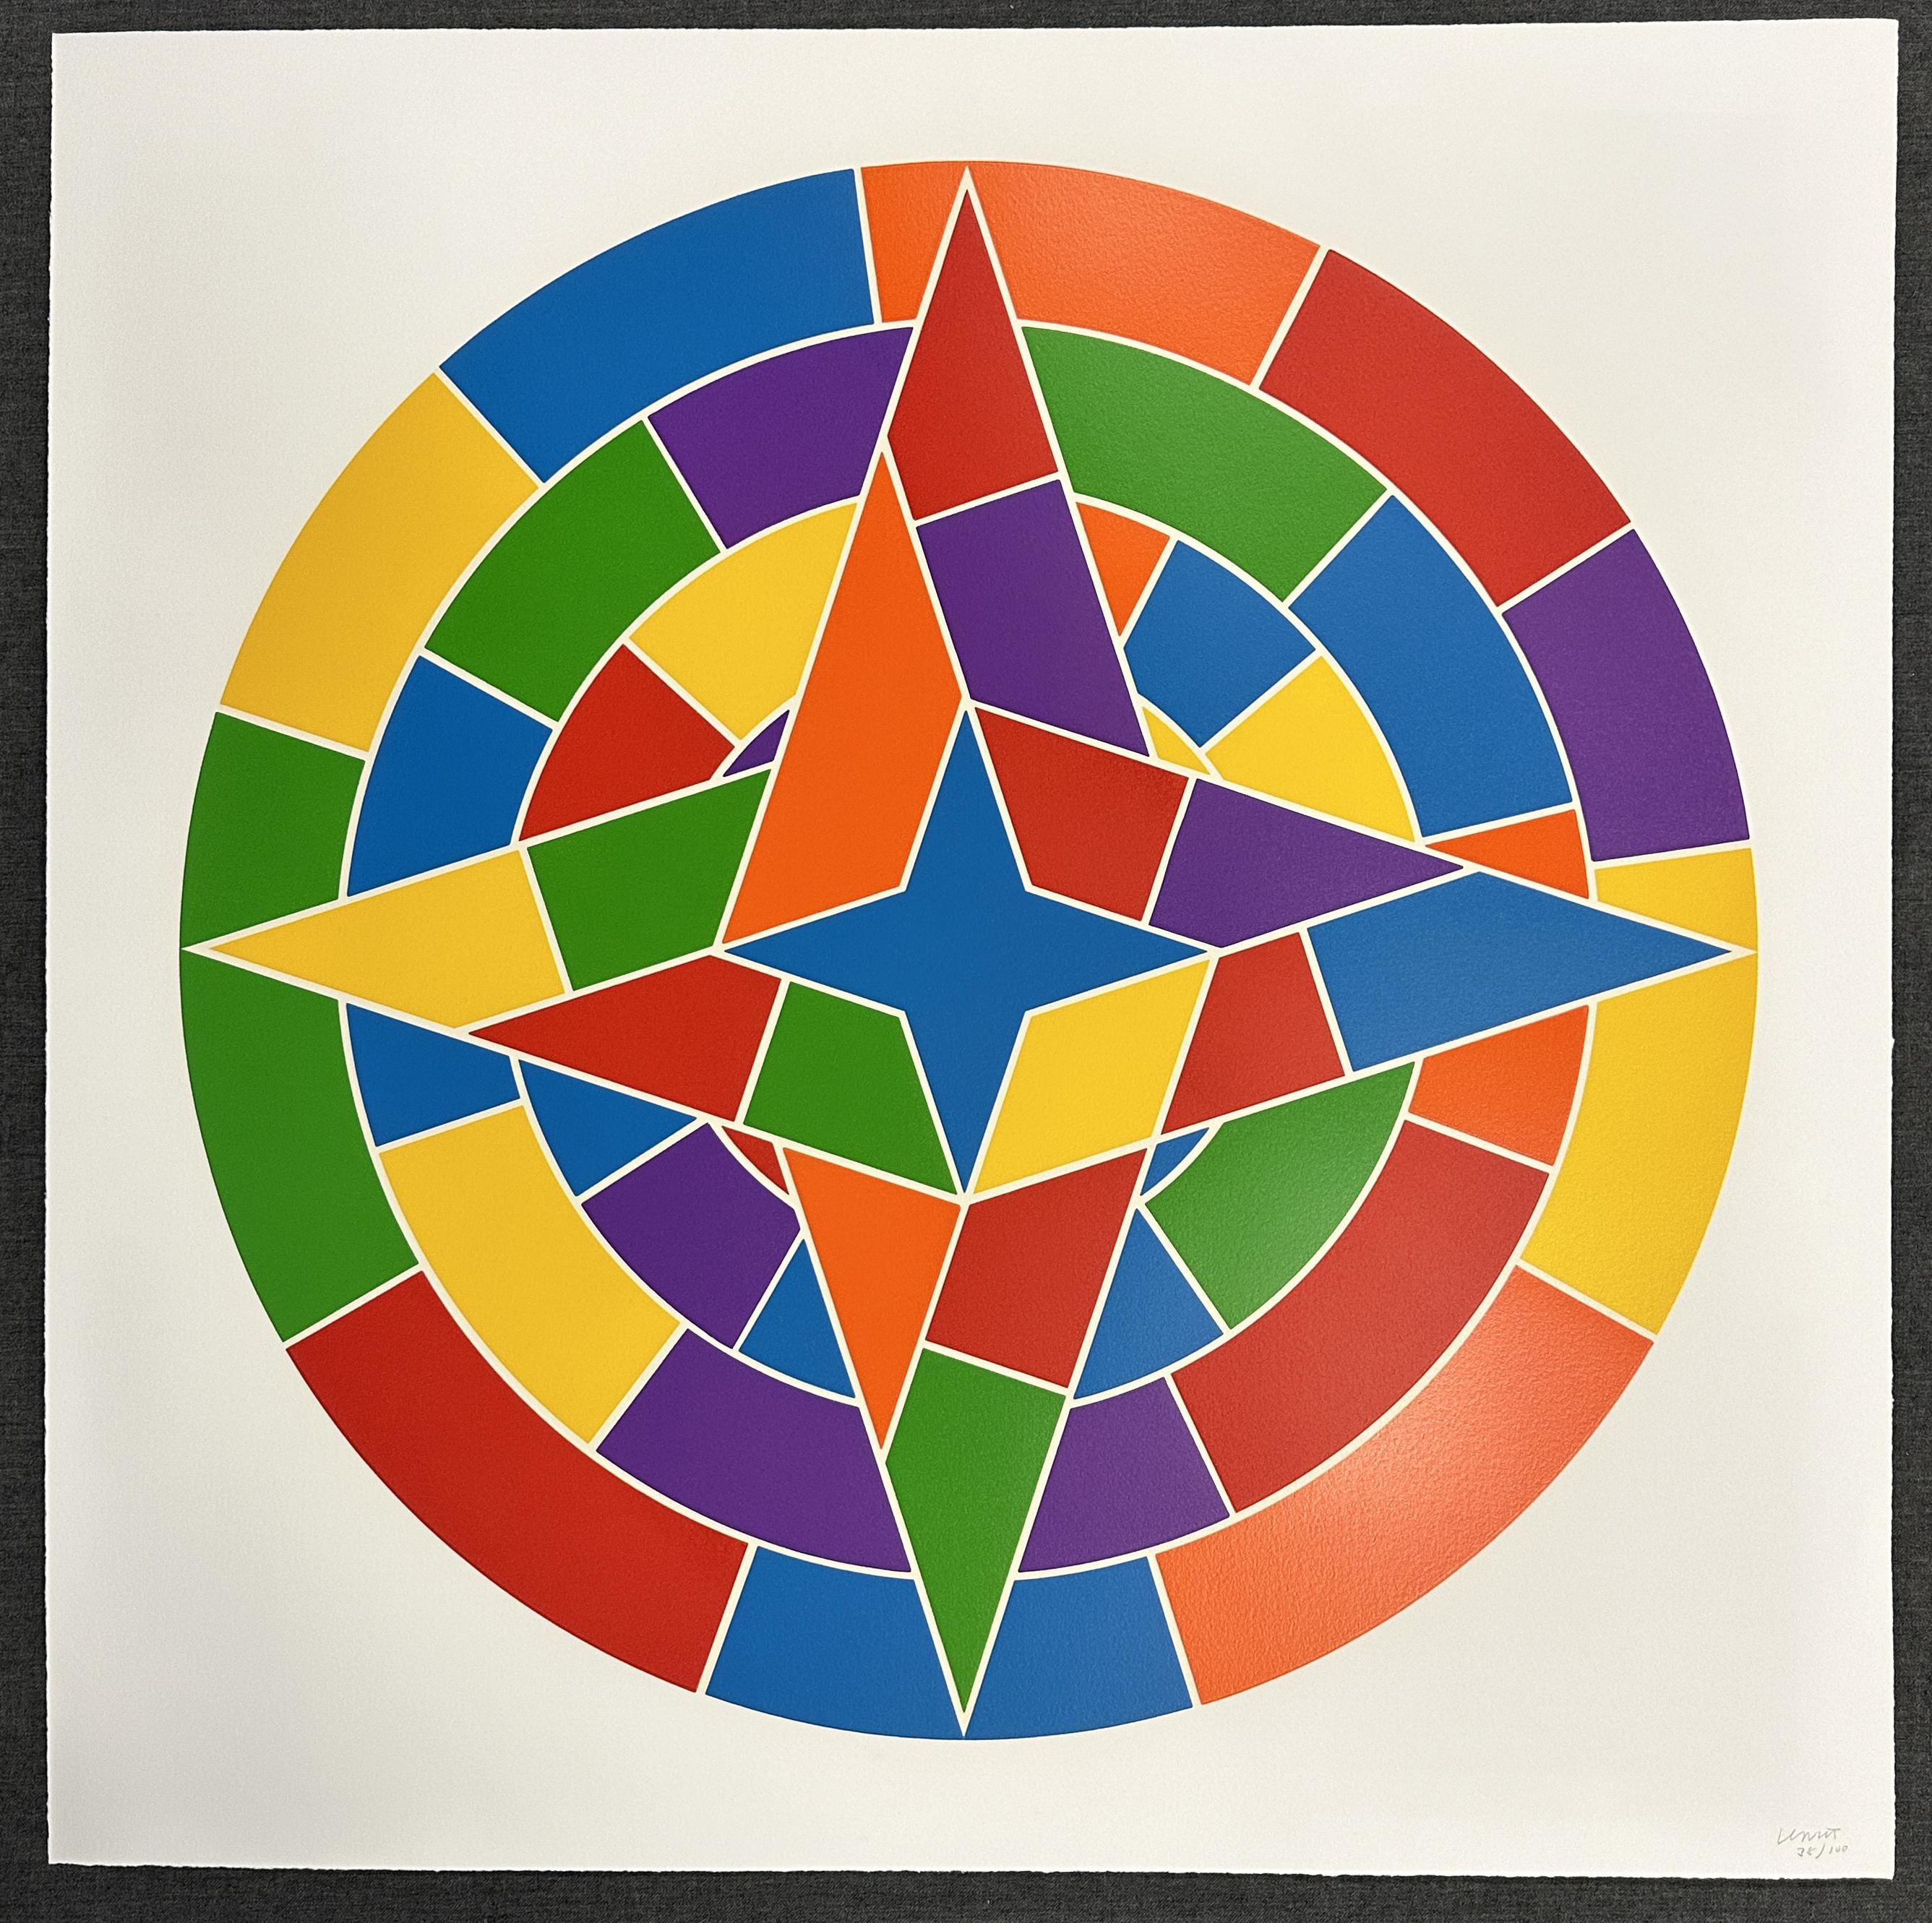 Stars 2002 - Abstract Geometric Print by Sol LeWitt